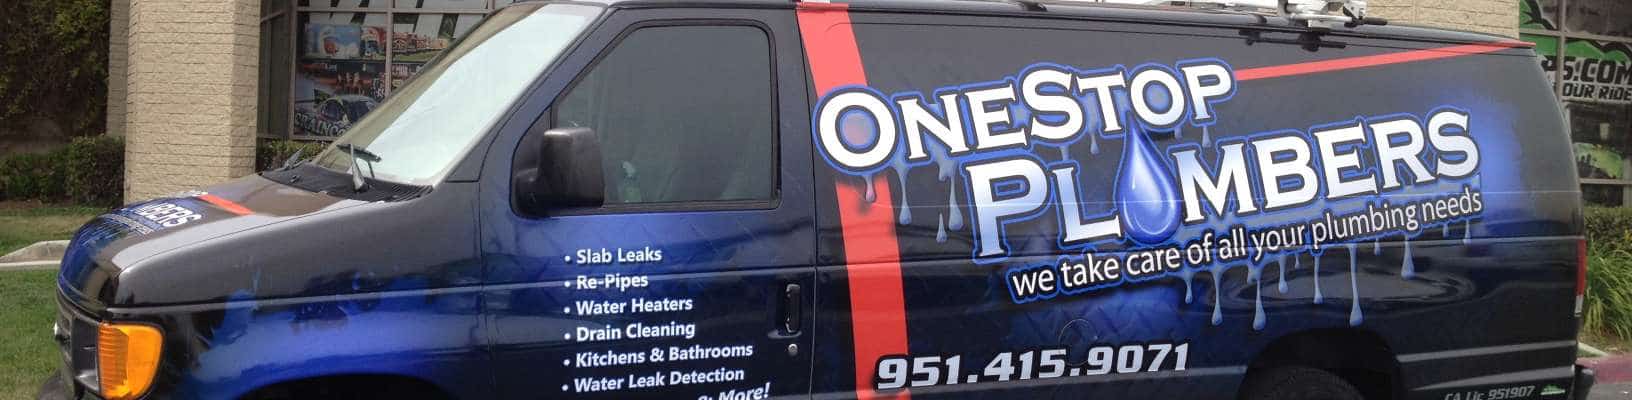 OneStop Plumbers - Plumbing and Leak Detection